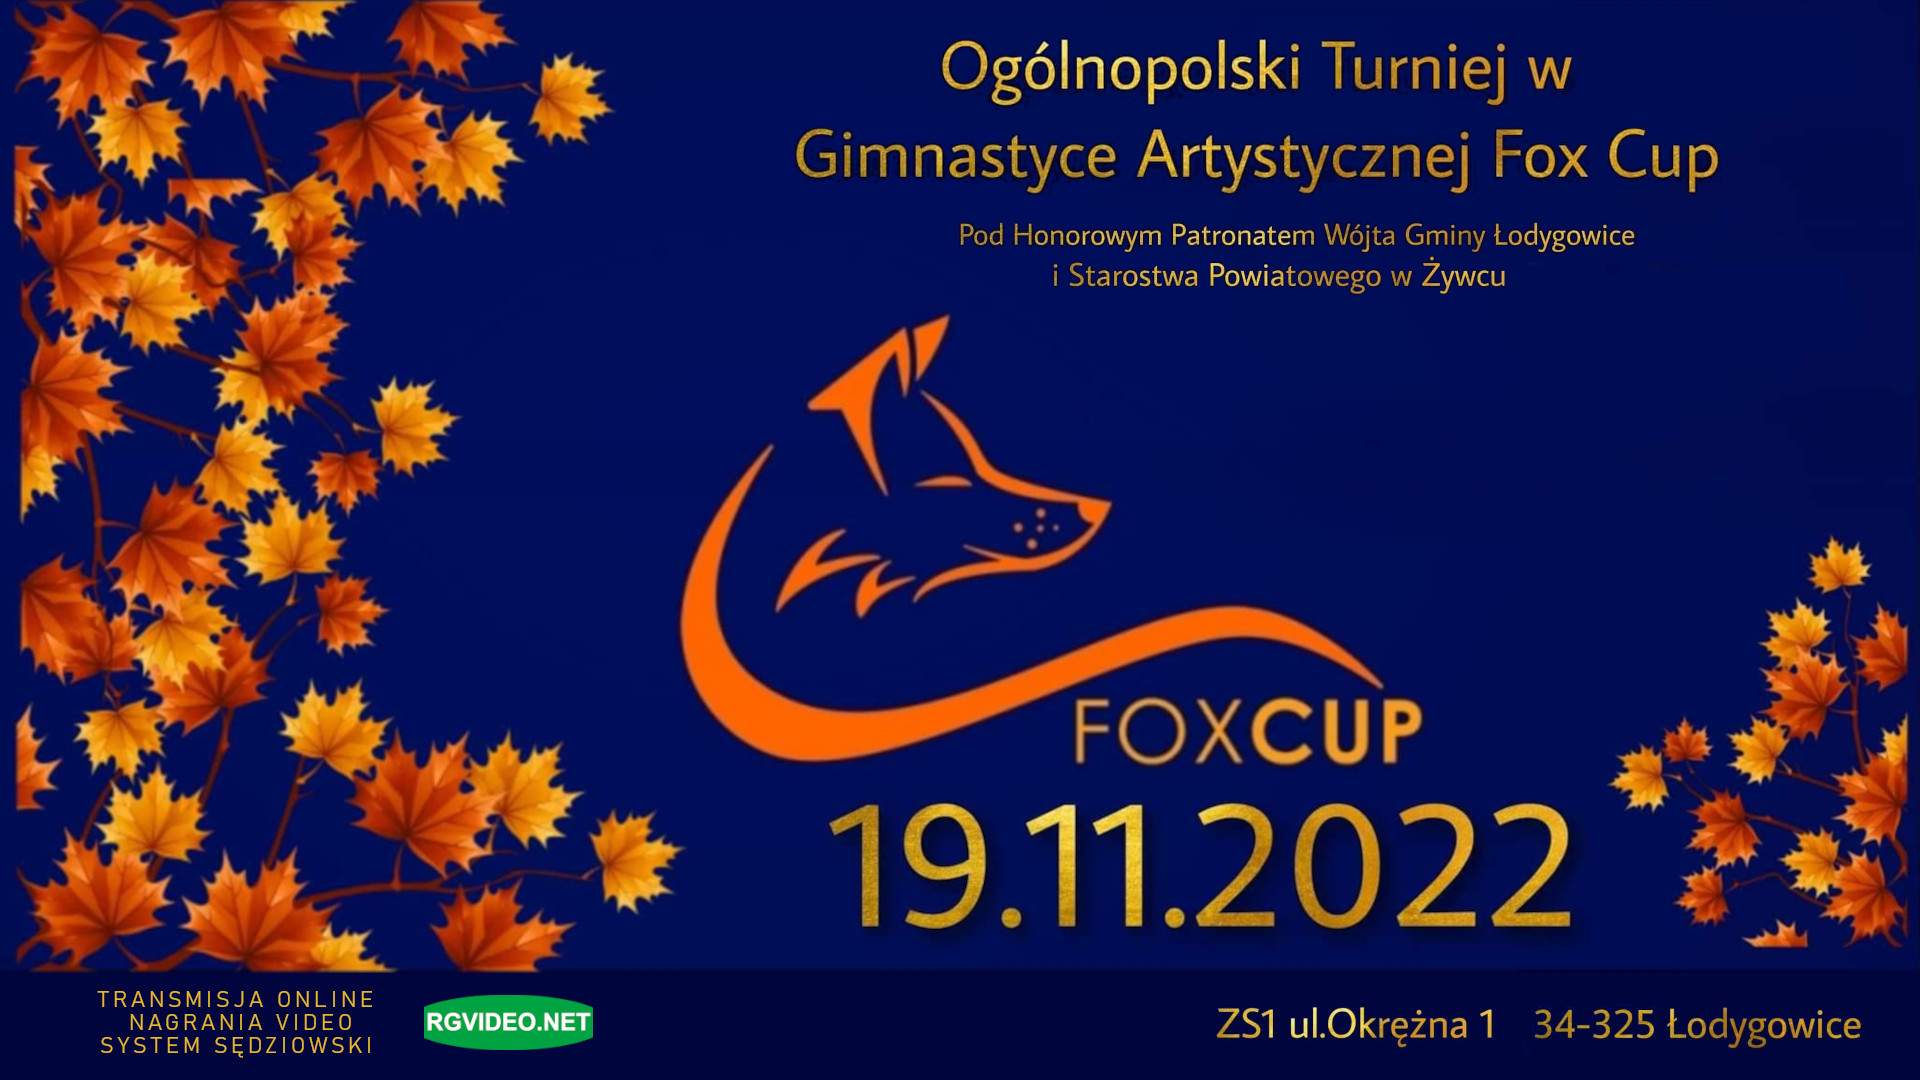 VIDEO - FOX CUP 2022